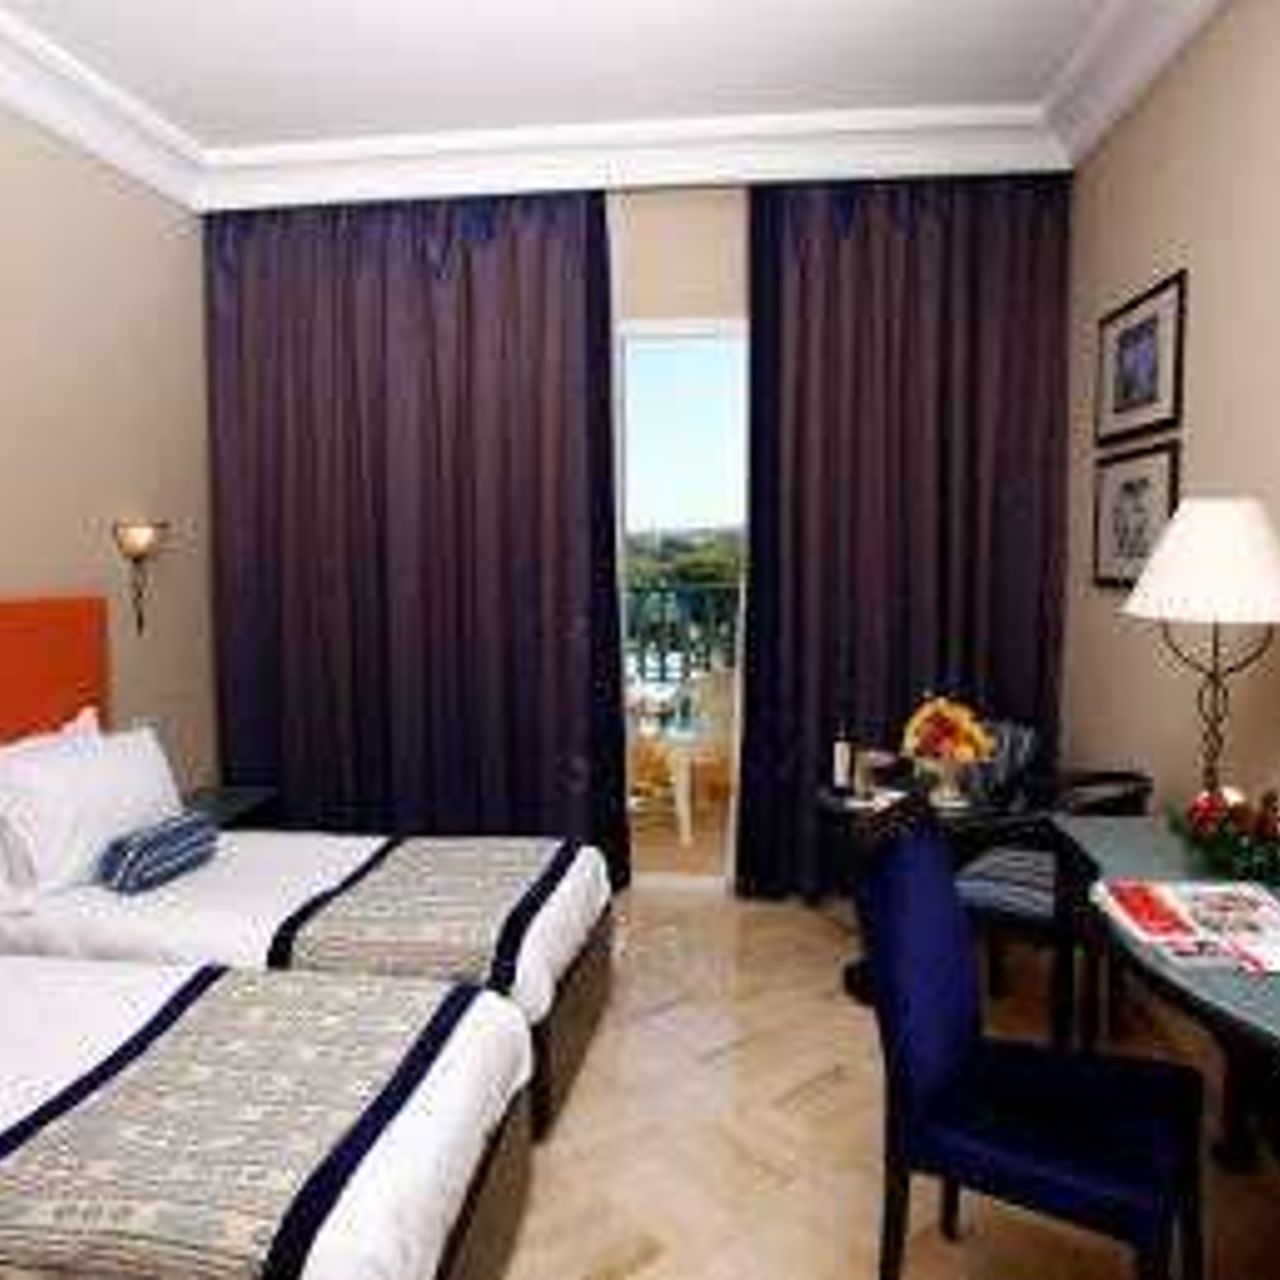 Hotel RAMADA PLAZA TUNIS en Gammarth - HOTEL INFO